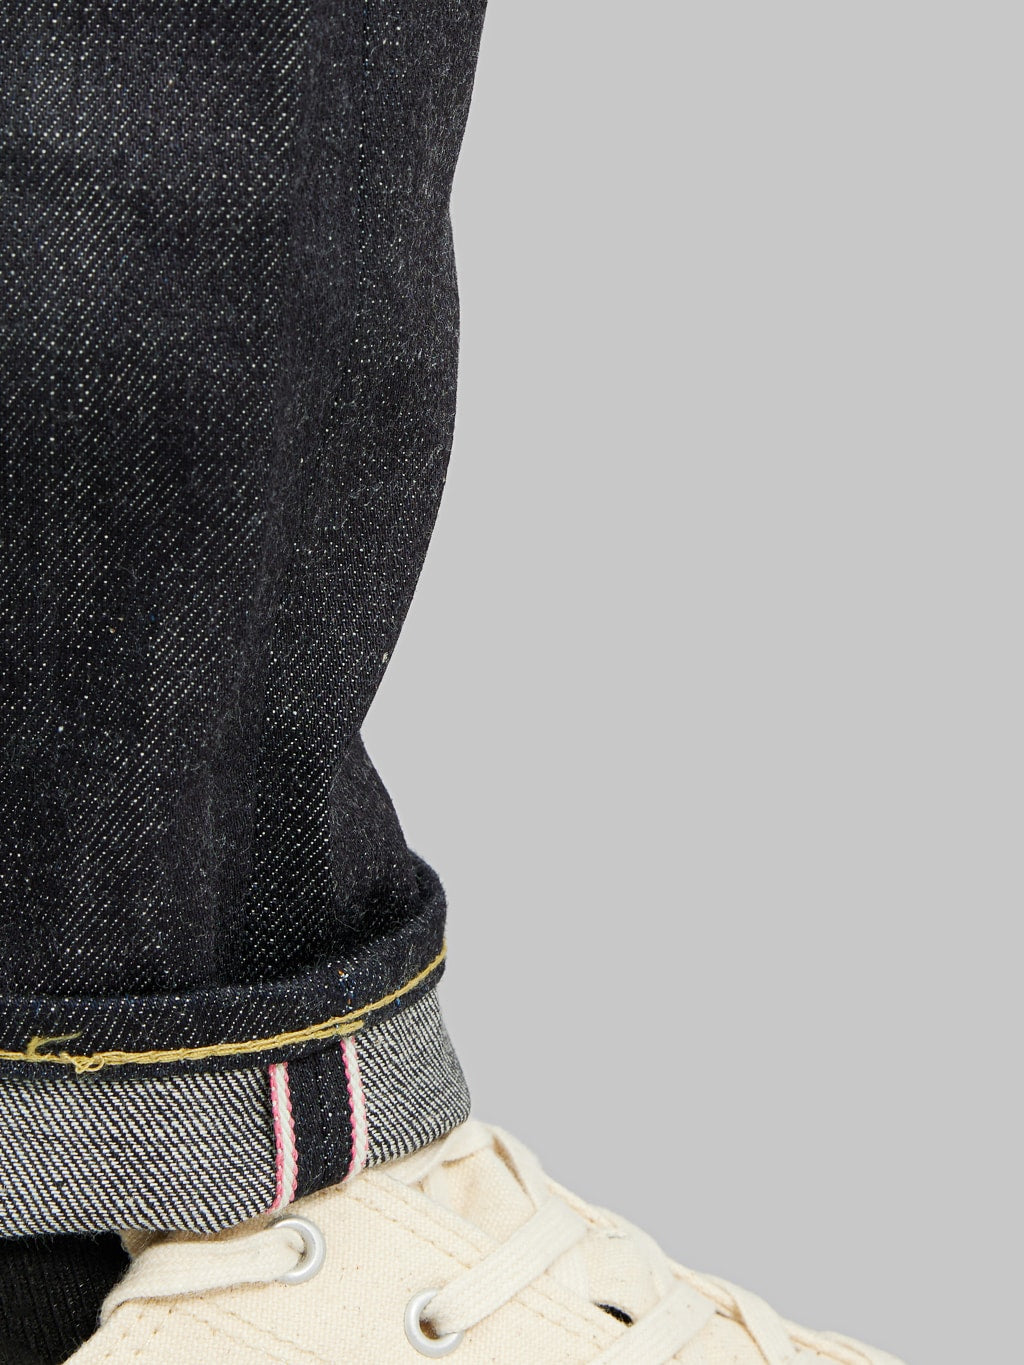 momotaro jeans 0306 12 12oz selvedge denim tight tapered selvedge